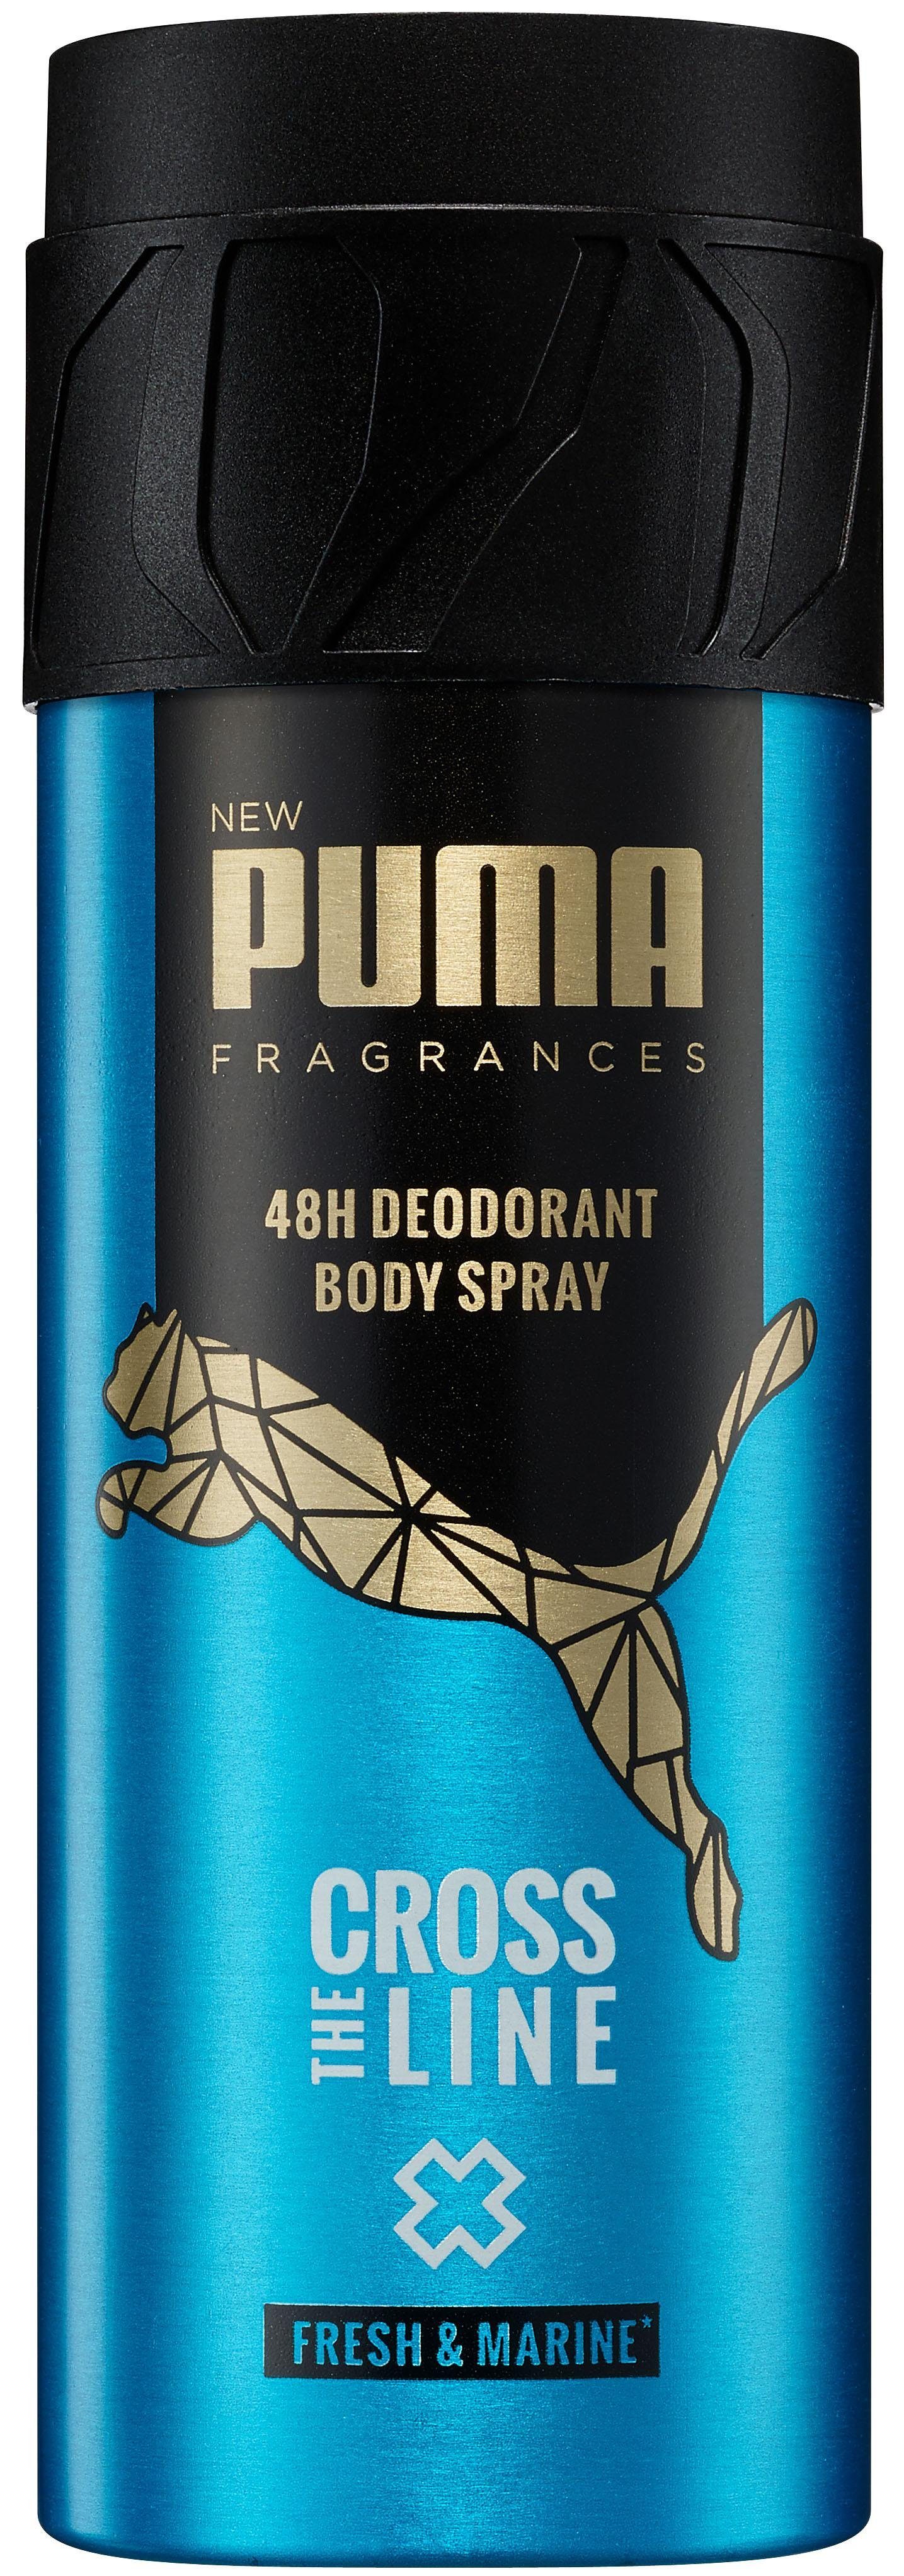 puma deodorant spray